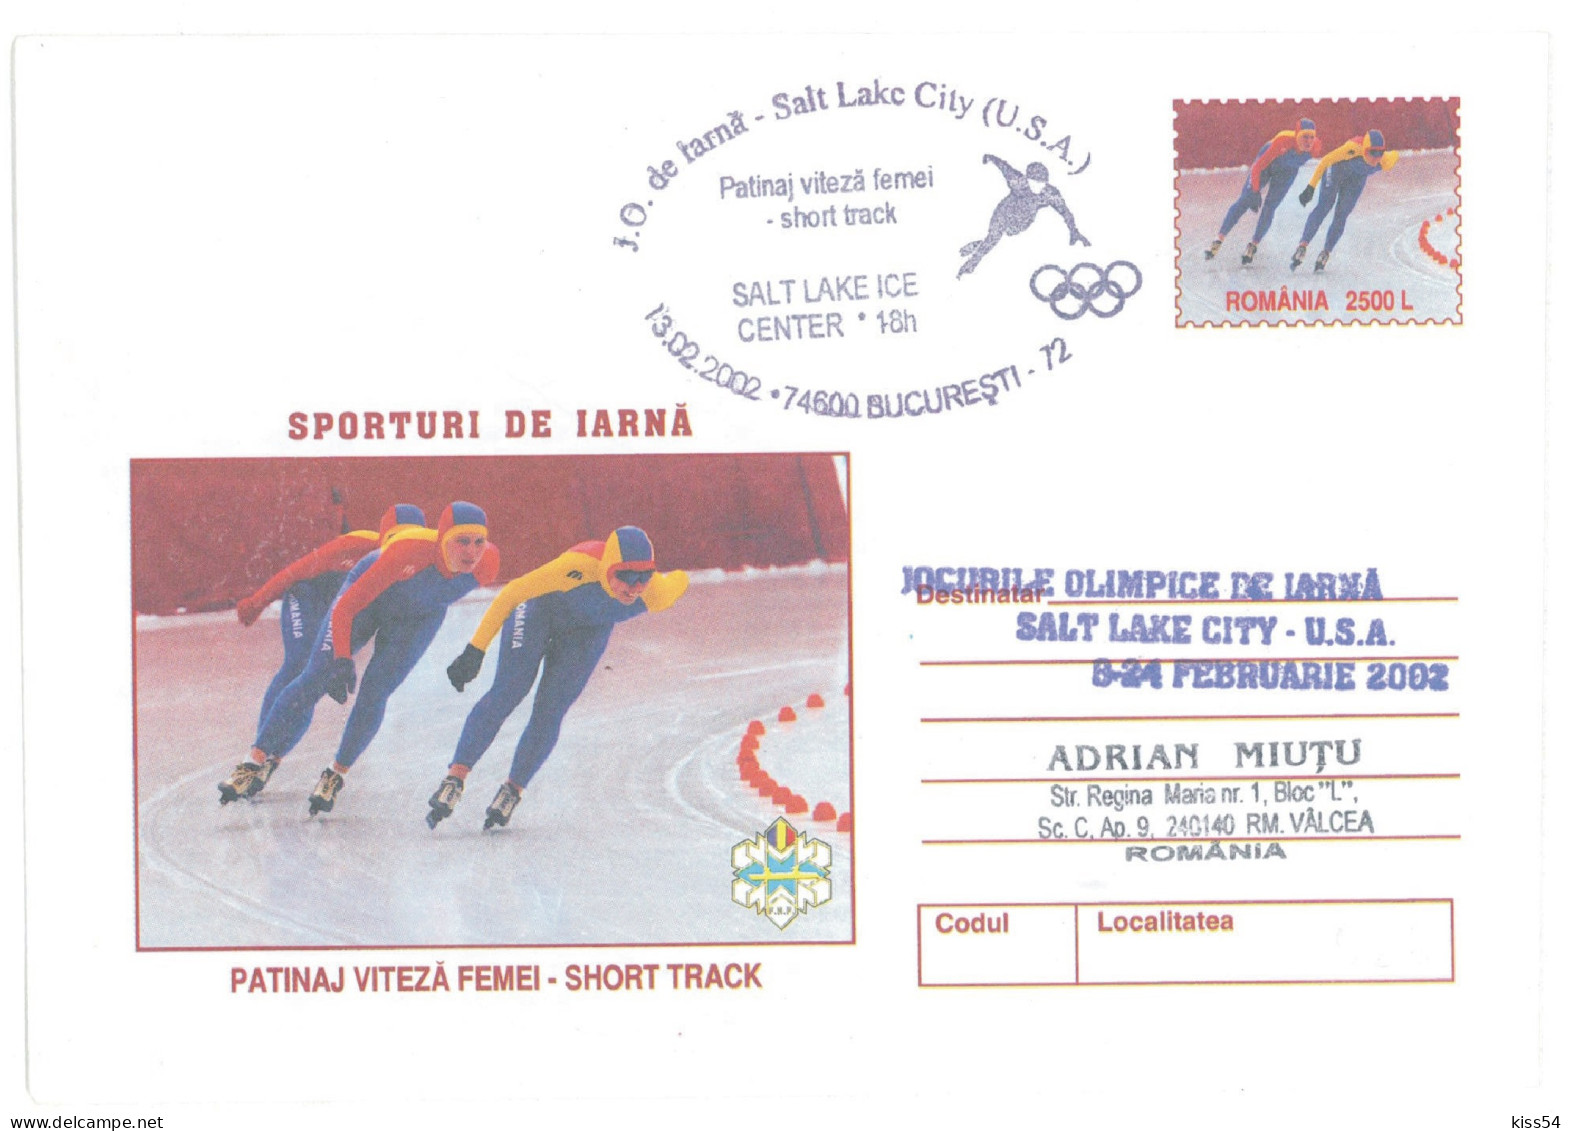 IP 2001 - 0230a U. S. A. SALT LAKE CITY 2002 - SHORT TRACK Women - Winter Olympic Games - Stationery - Used - 2001 - Winter 2002: Salt Lake City